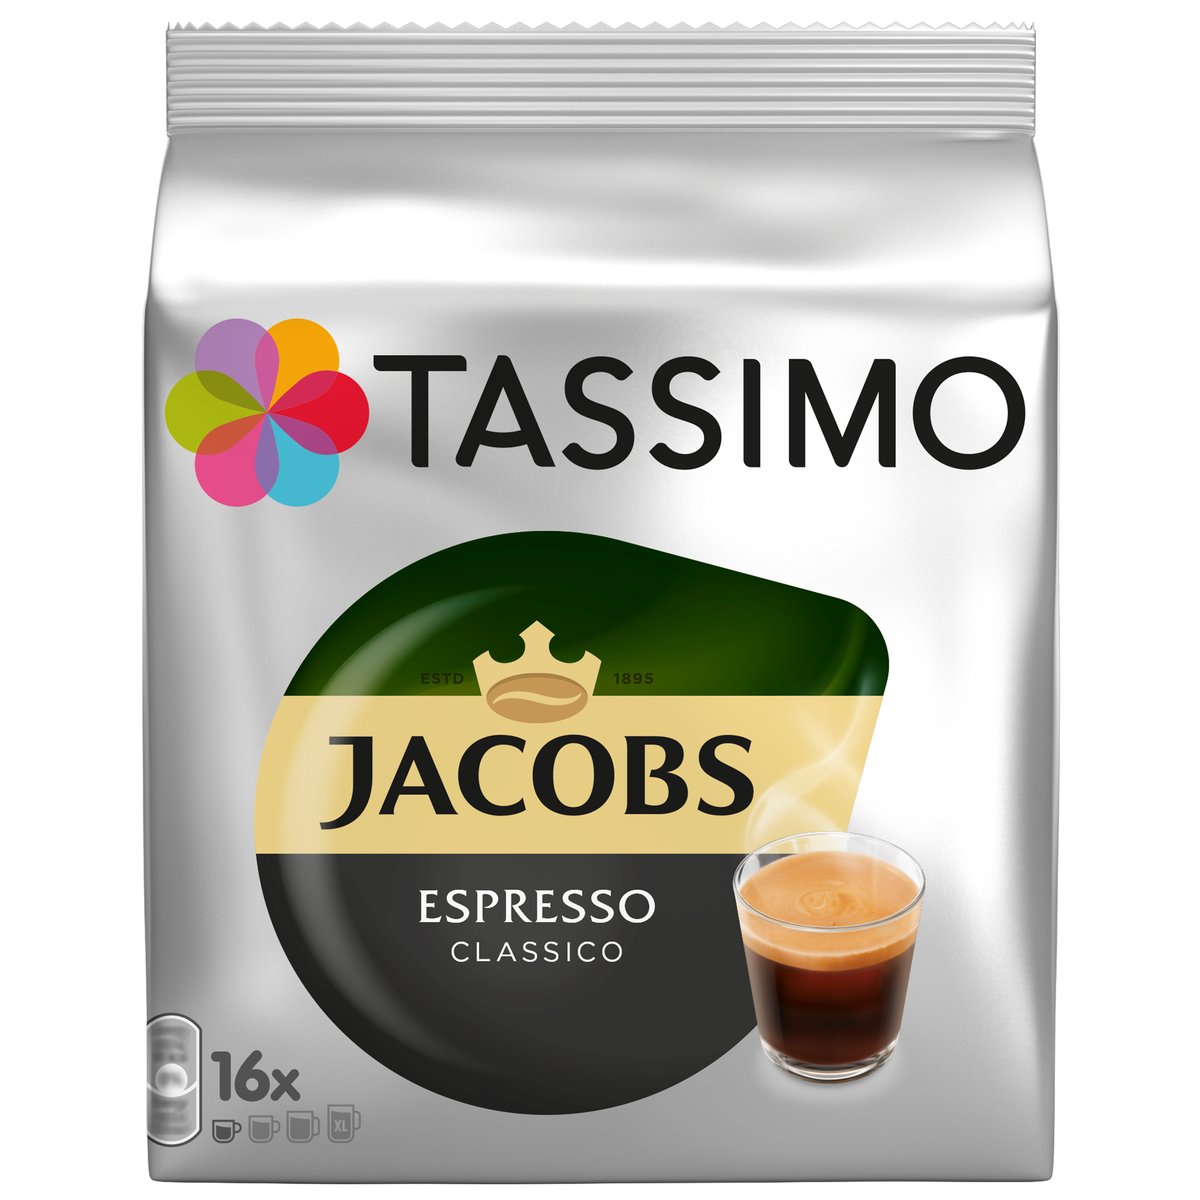 Tassimo Jacobs Espresso Classico kapsle